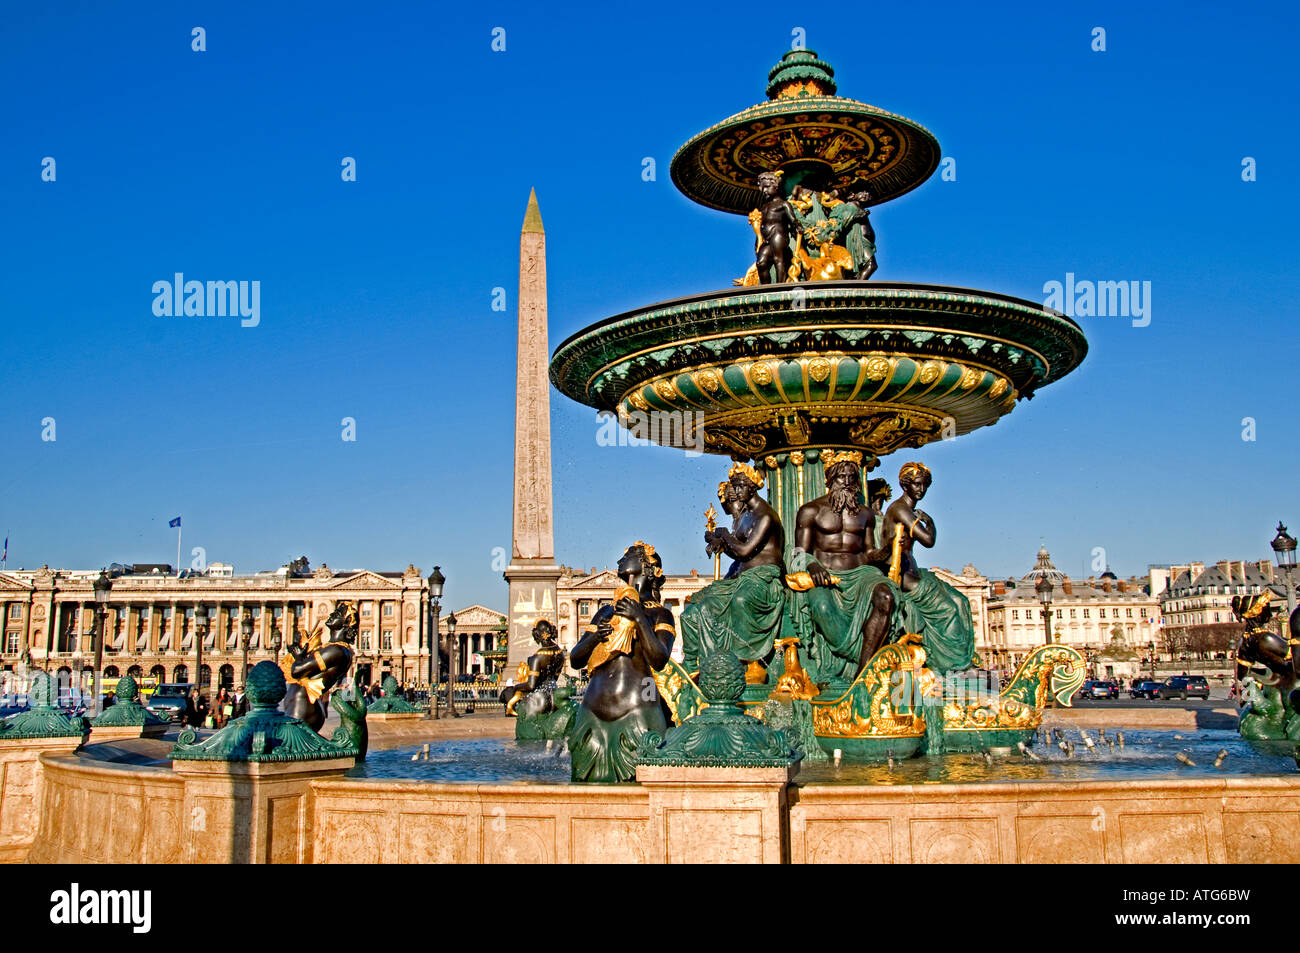 Fountain in the Place de la Concorde Paris France Stock Photo